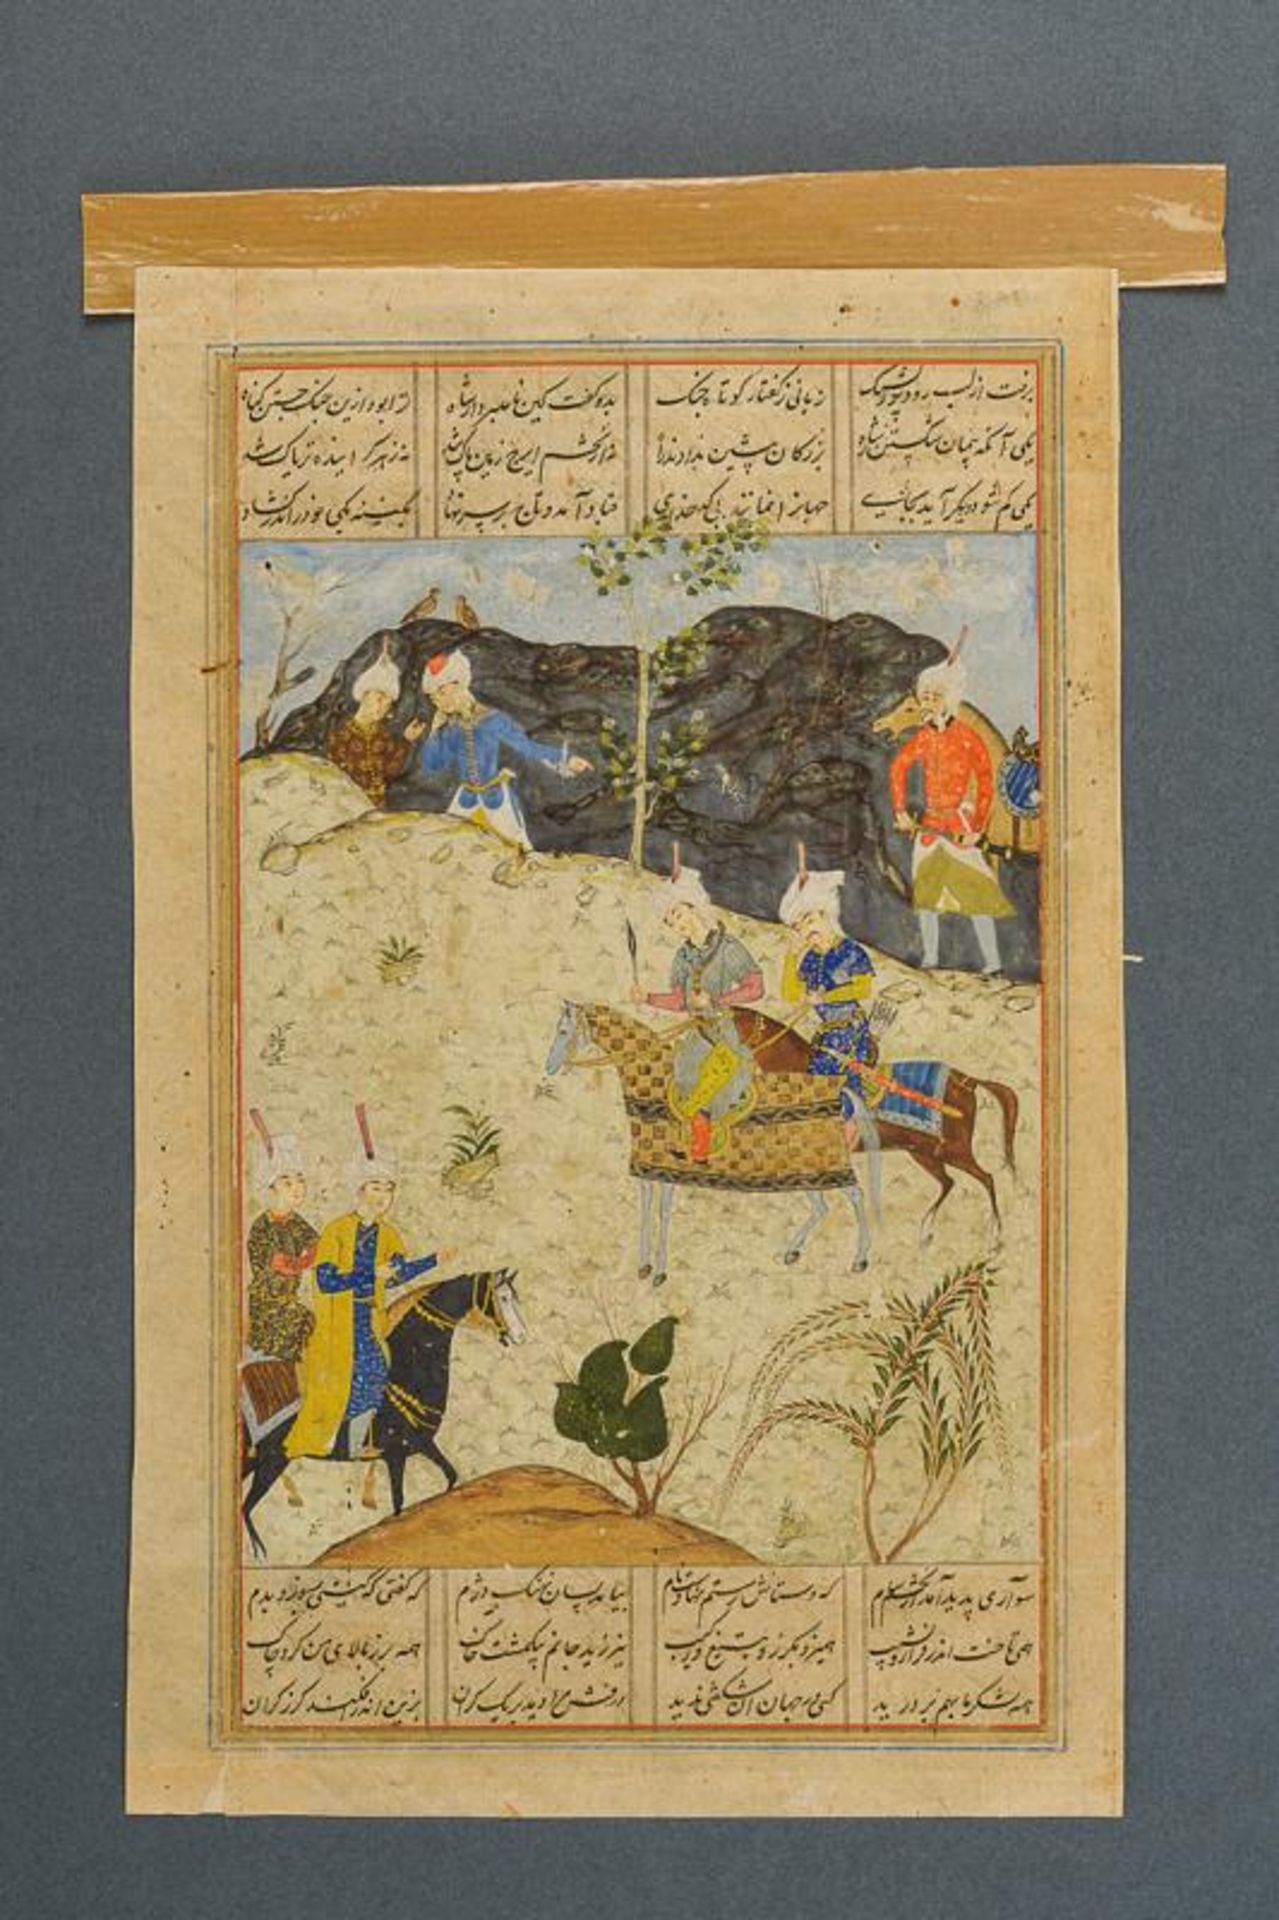 An illustration of the Shahnameh by Ferdowsi